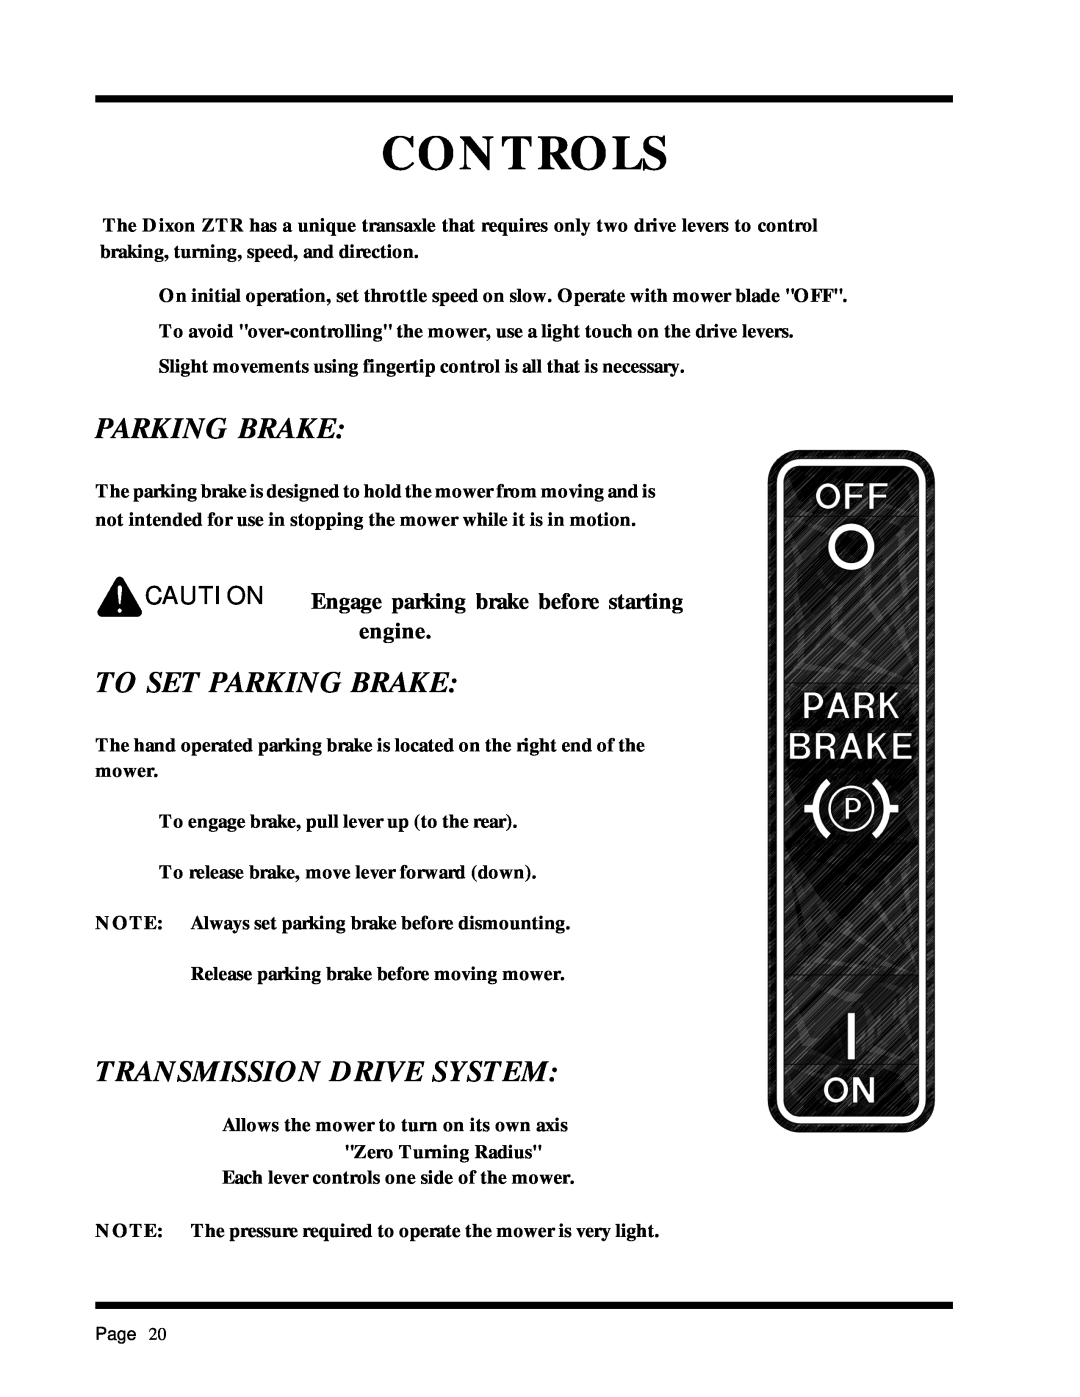 Dixon ZTR 3303 To Set Parking Brake, Transmission Drive System, Controls, CAUTION Engage parking brake before starting 